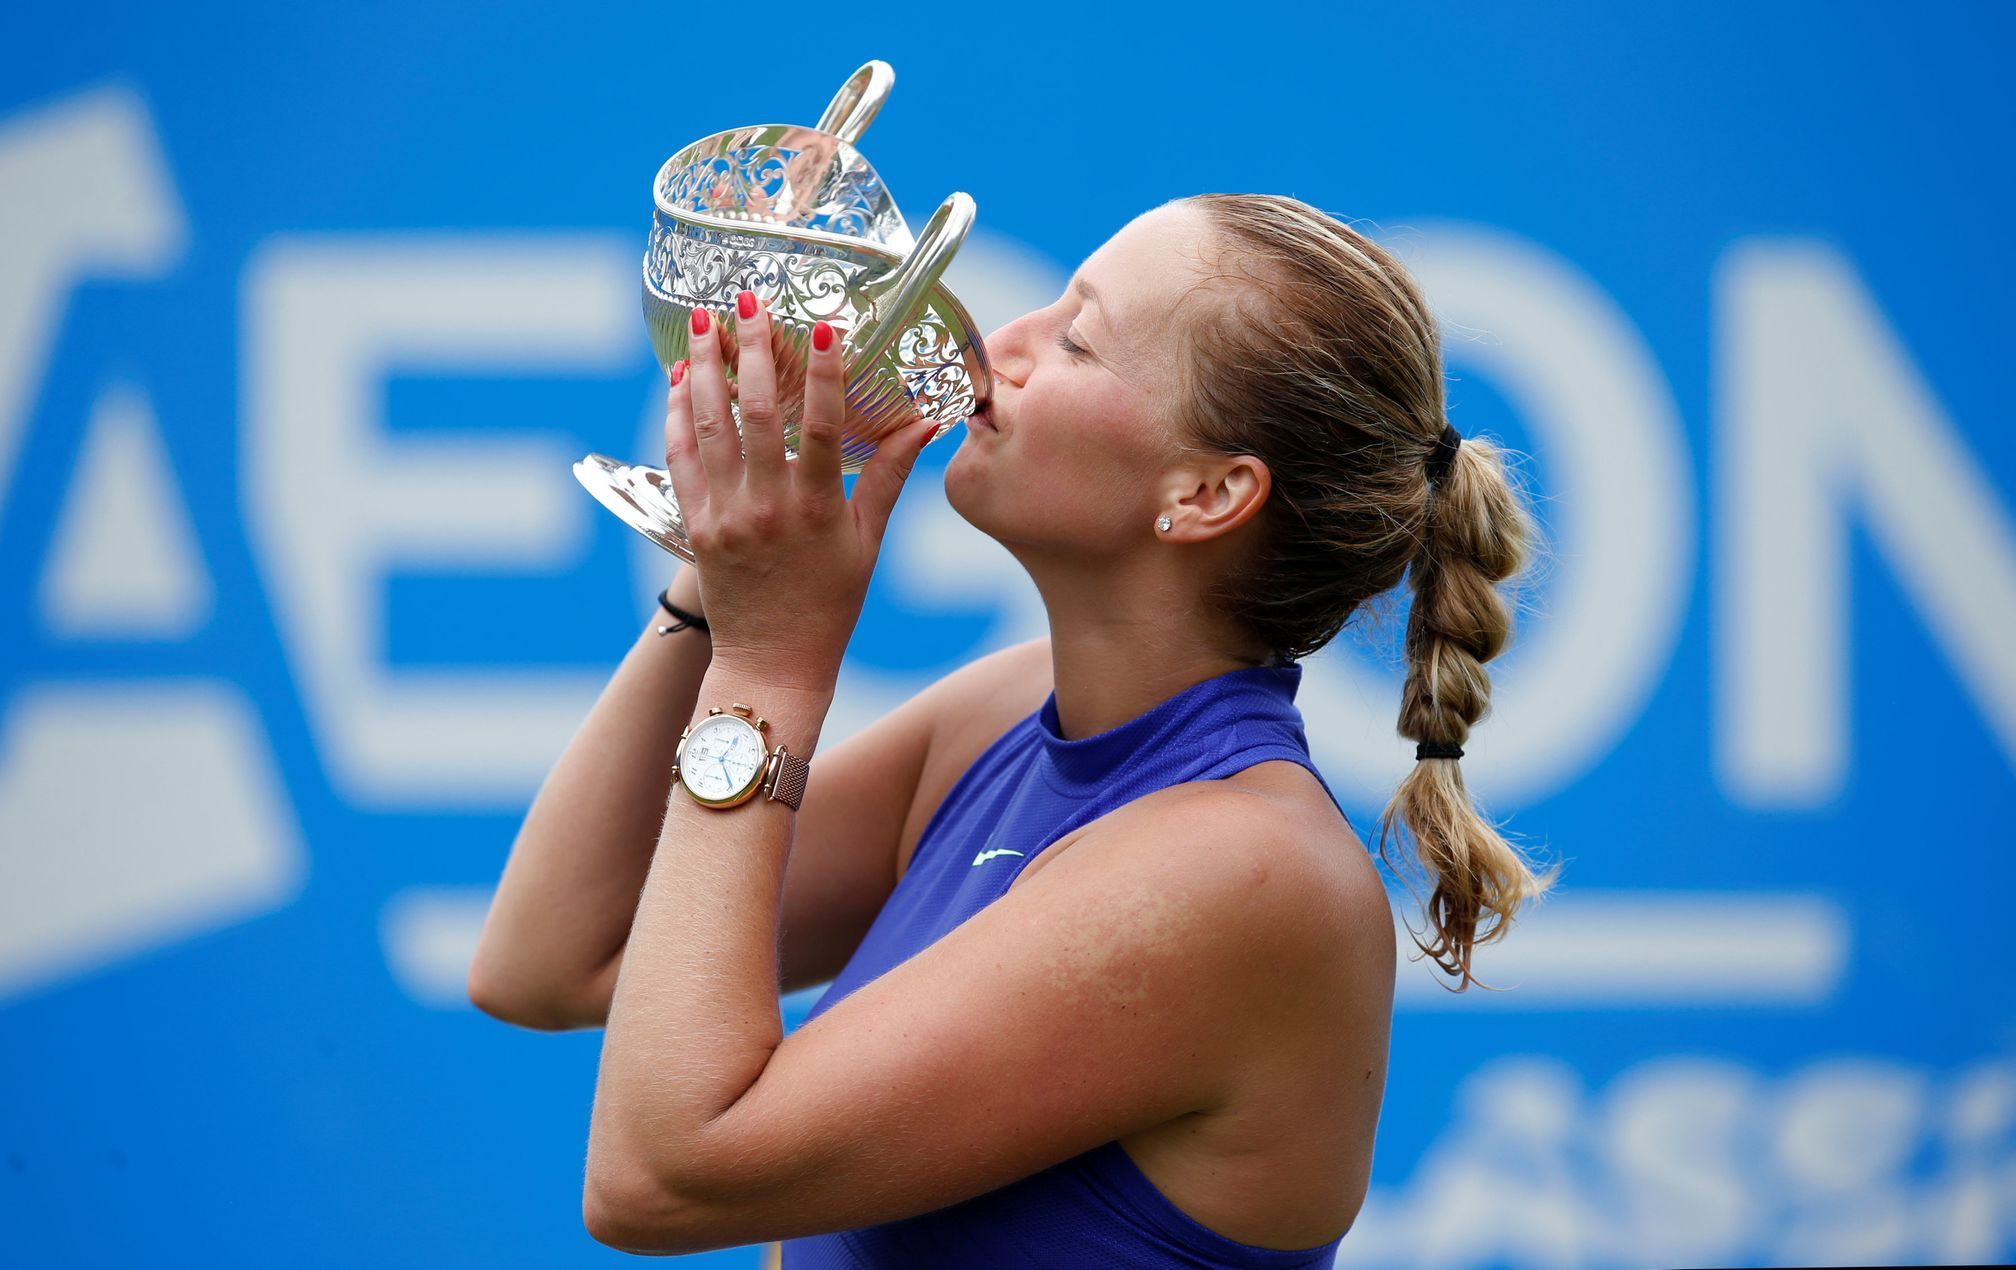 Petra Kvitová - finále turnaje v Birminghamu